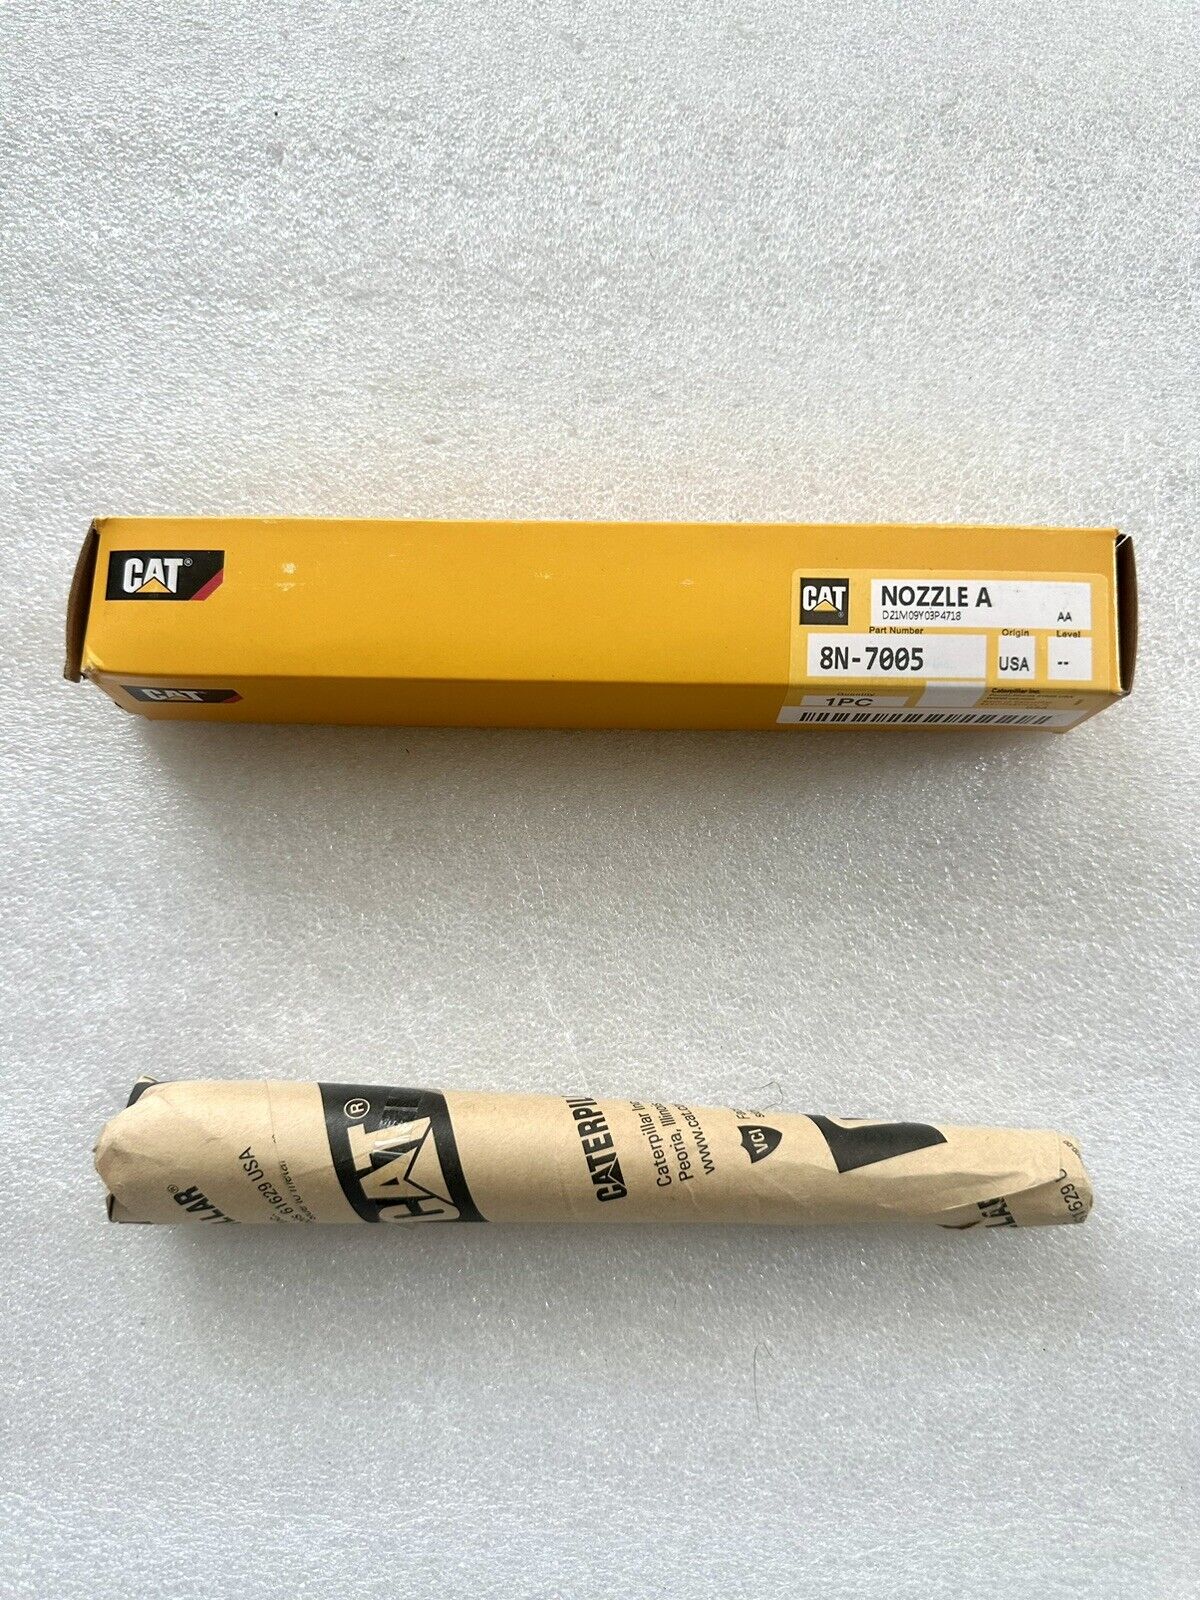 Genuine CAT Caterpillar Fuel Injector GP Pencil Nozzle A 8N-7005